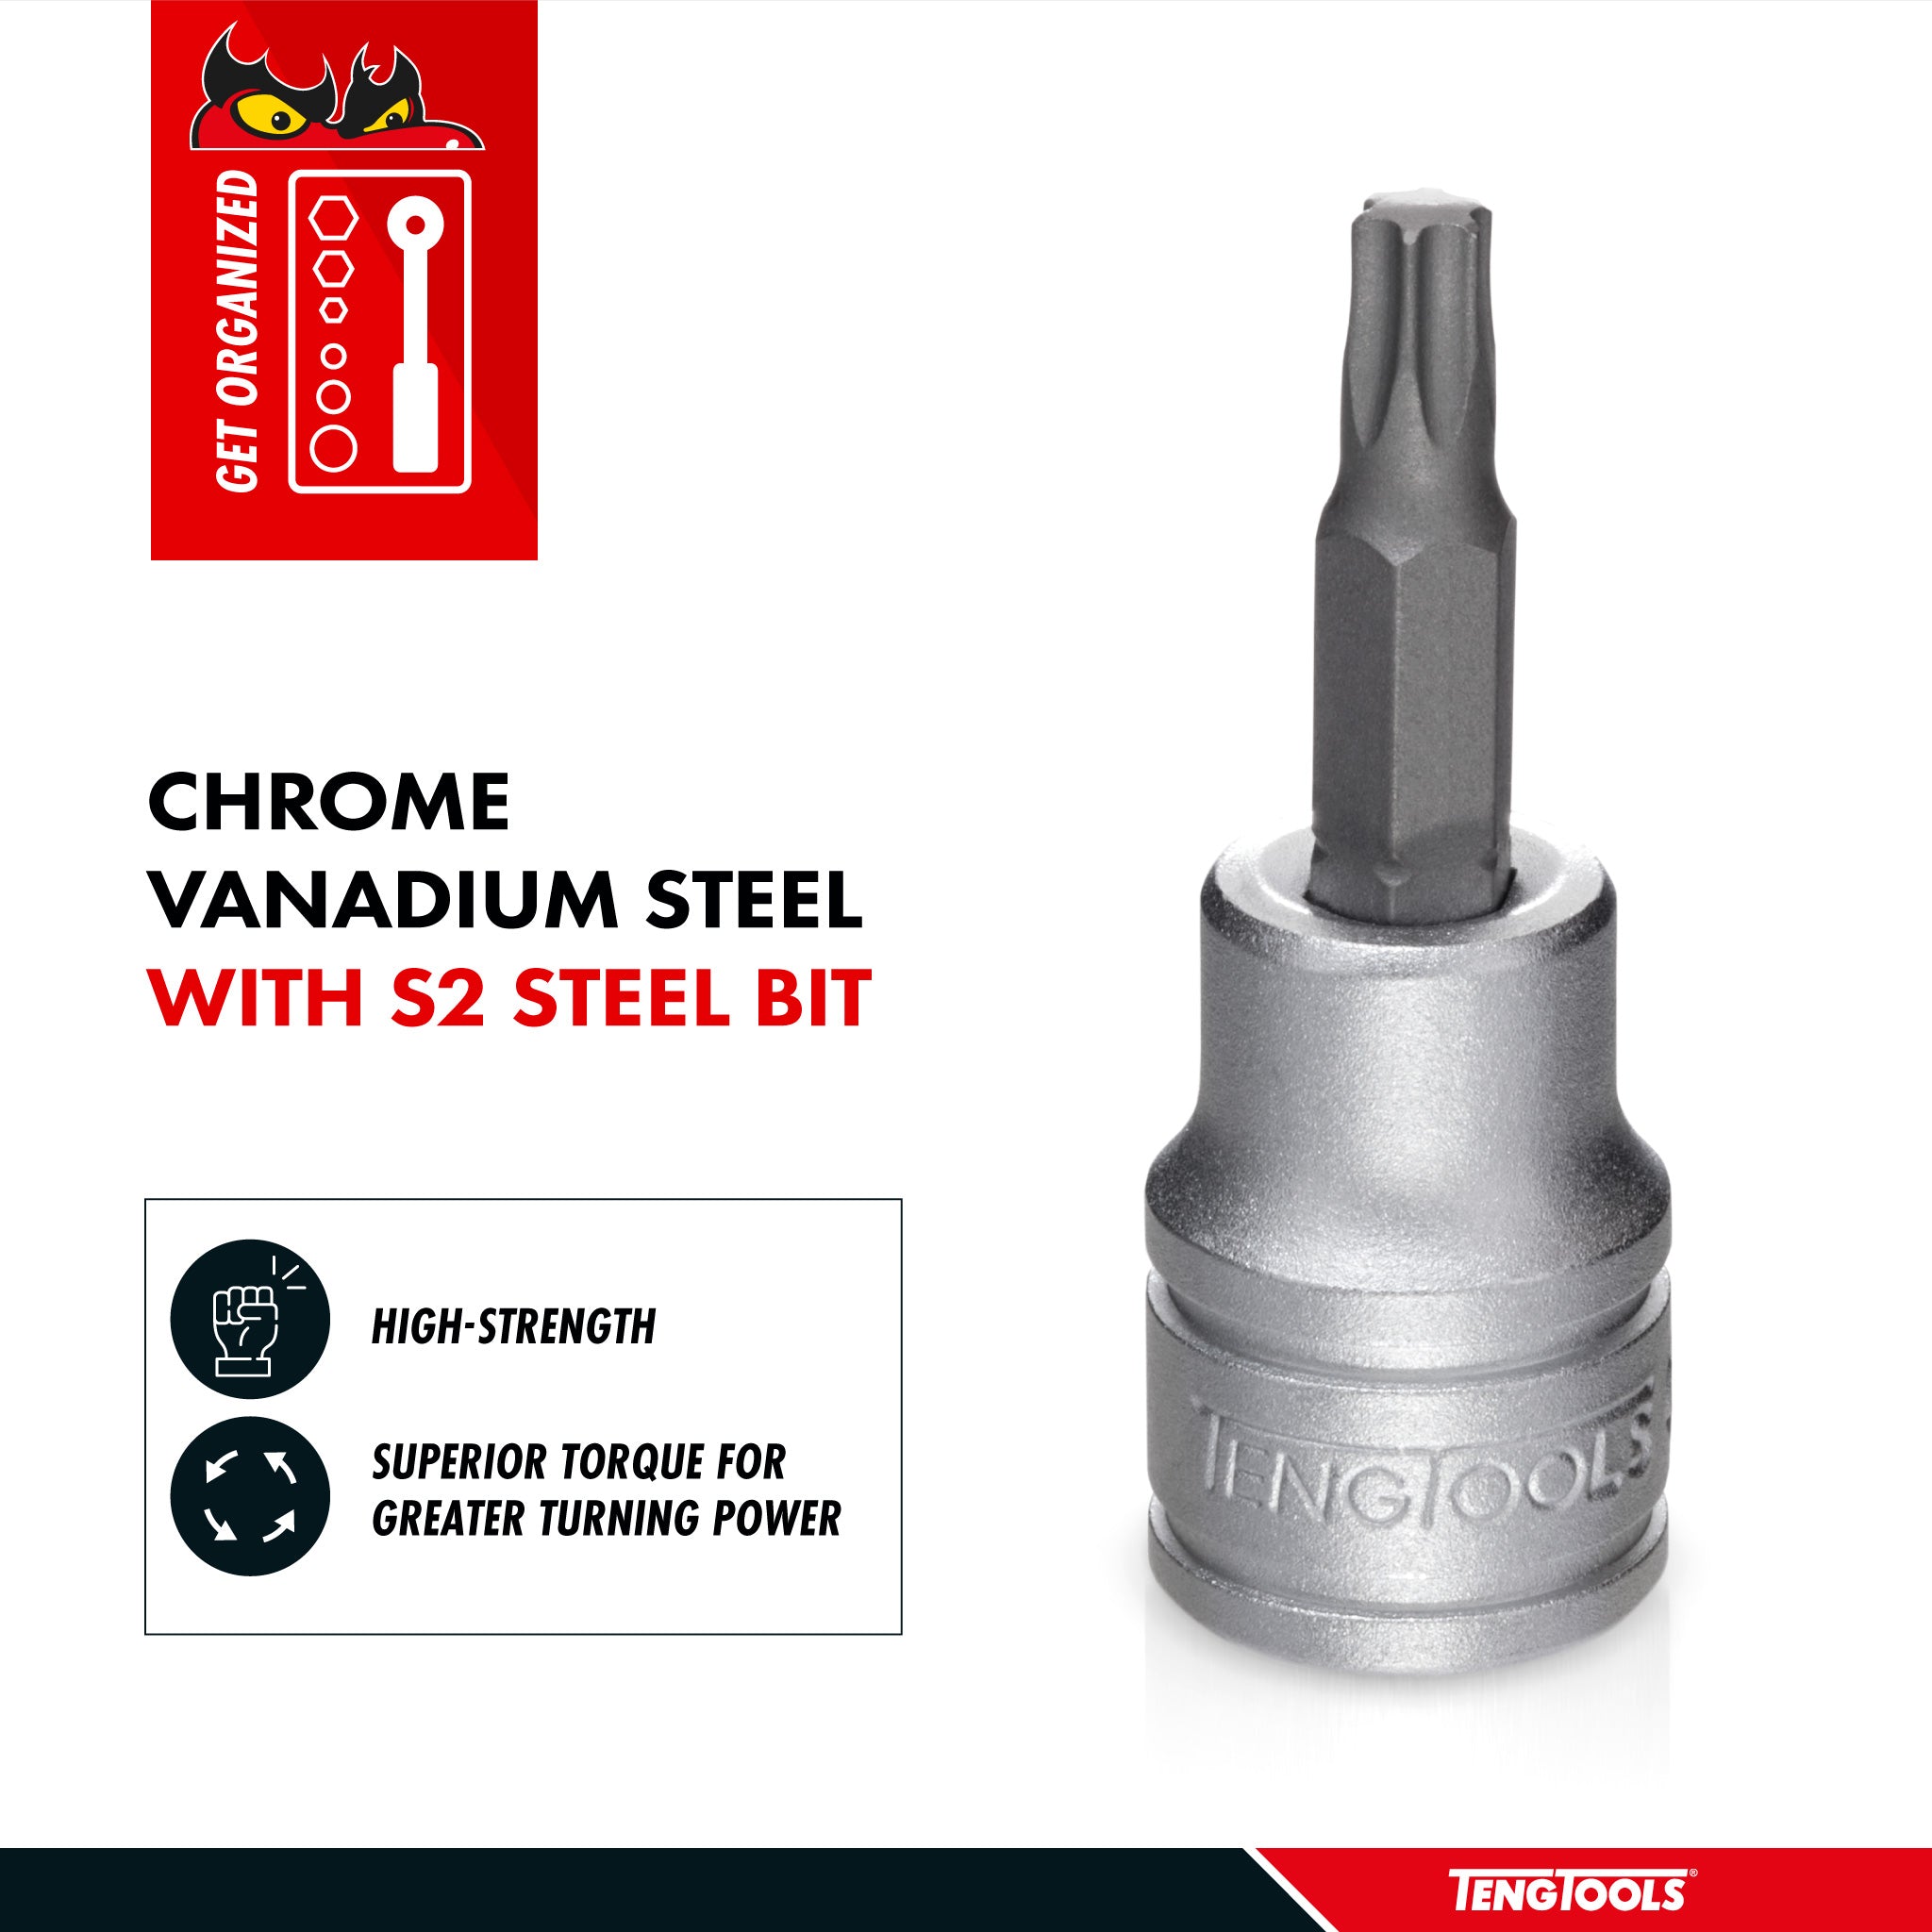 Teng Tools 1/2 Inch Drive Metric Torx TX Chrome Vanadium Sockets - TX30